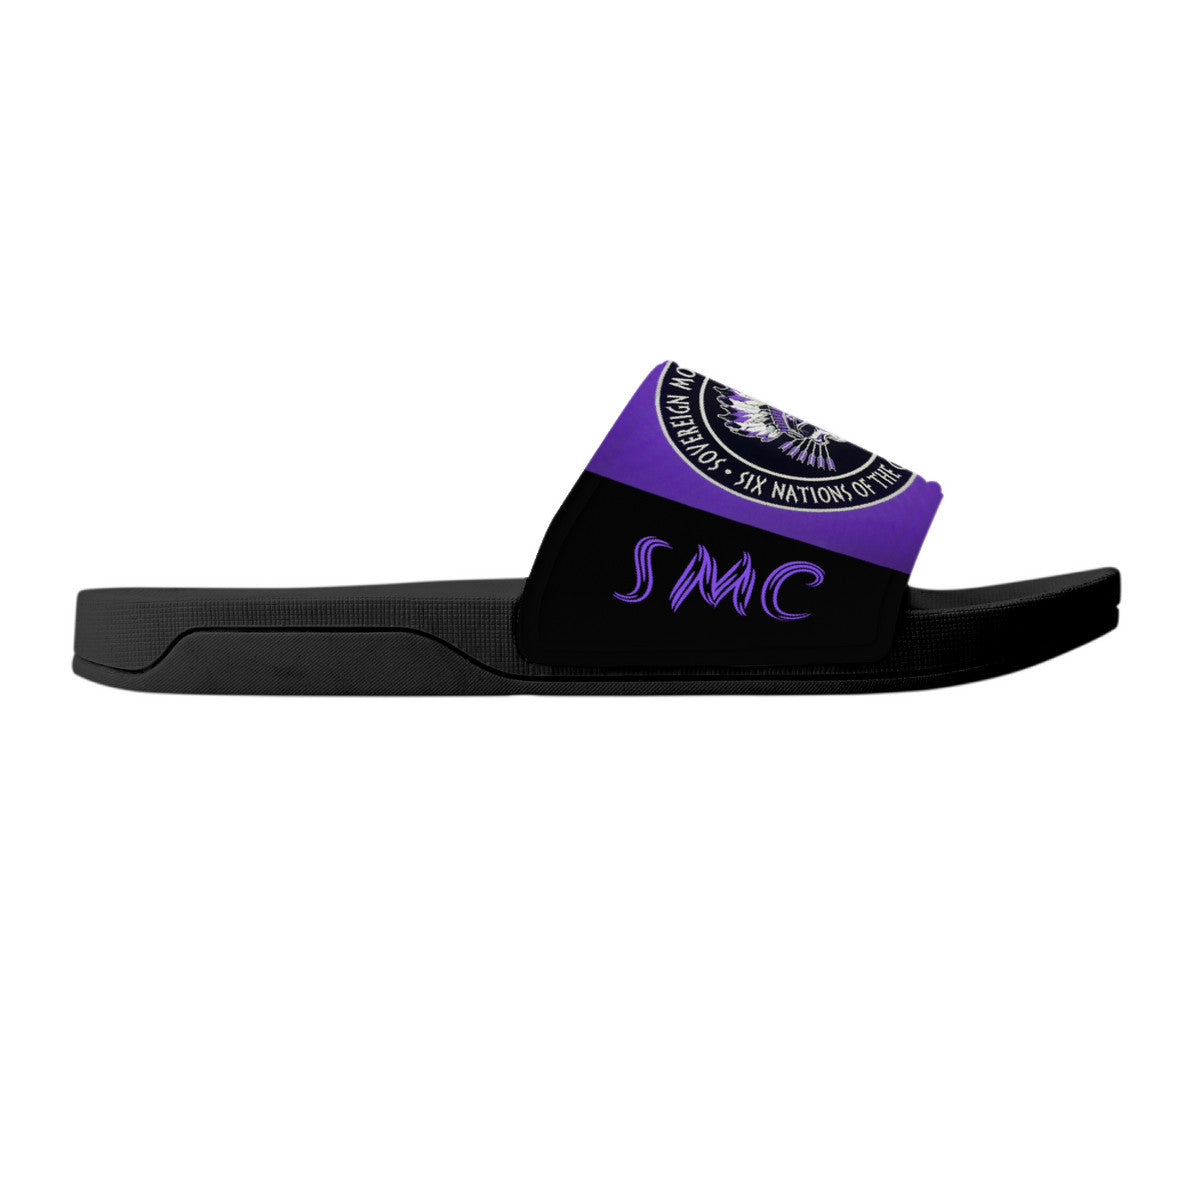 Martin Speyer Personalized Slide Sandals - Black